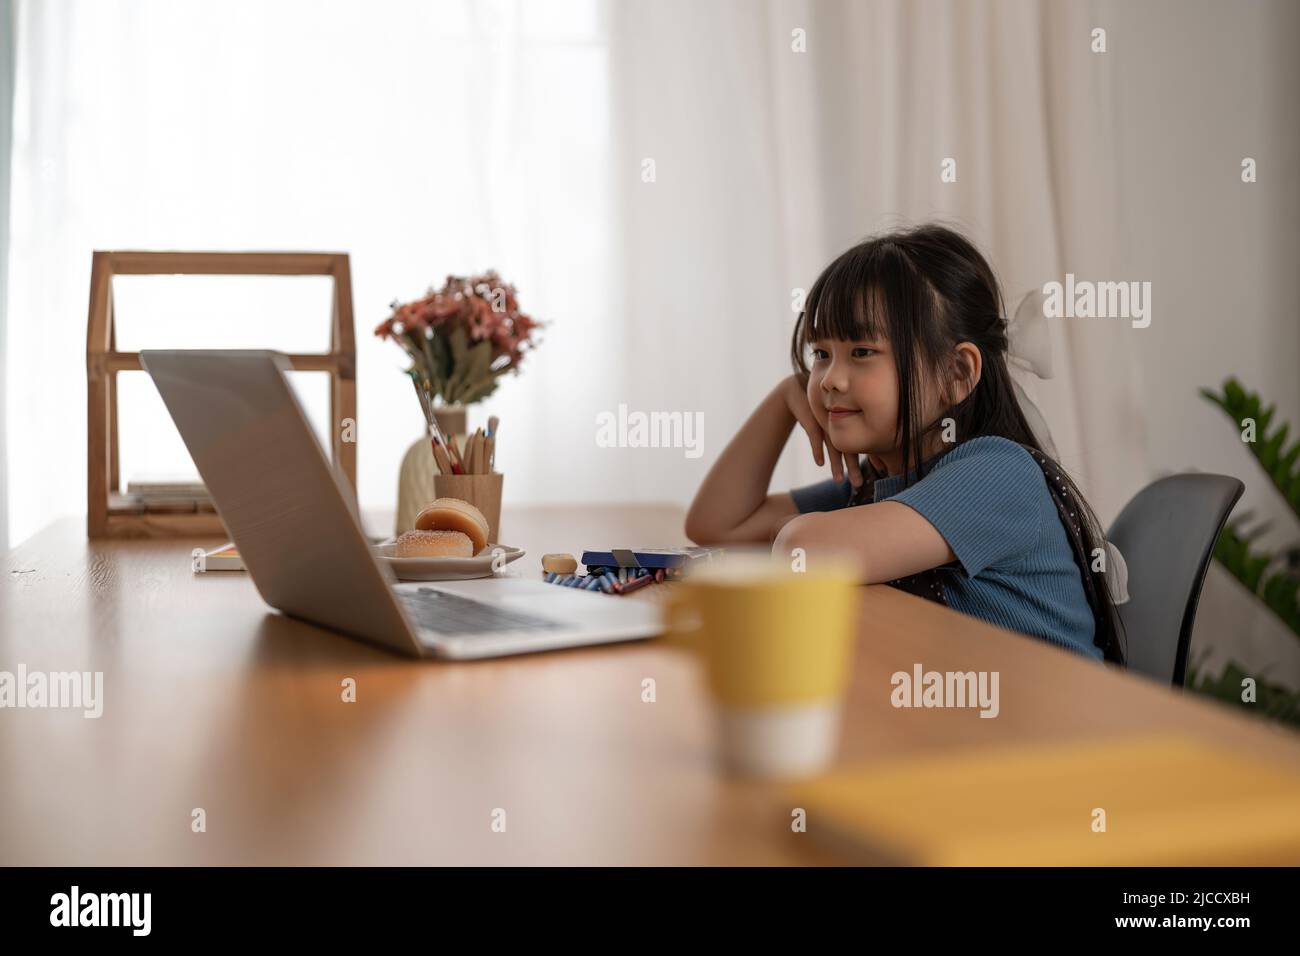 Asiatische Kinder Mädchen mit Laptop-Computer für Online-Studie Homeschooling. homeschooling, Online-Studie, Home Quarantäne, Online-Lernen, Corona-Virus Stockfoto